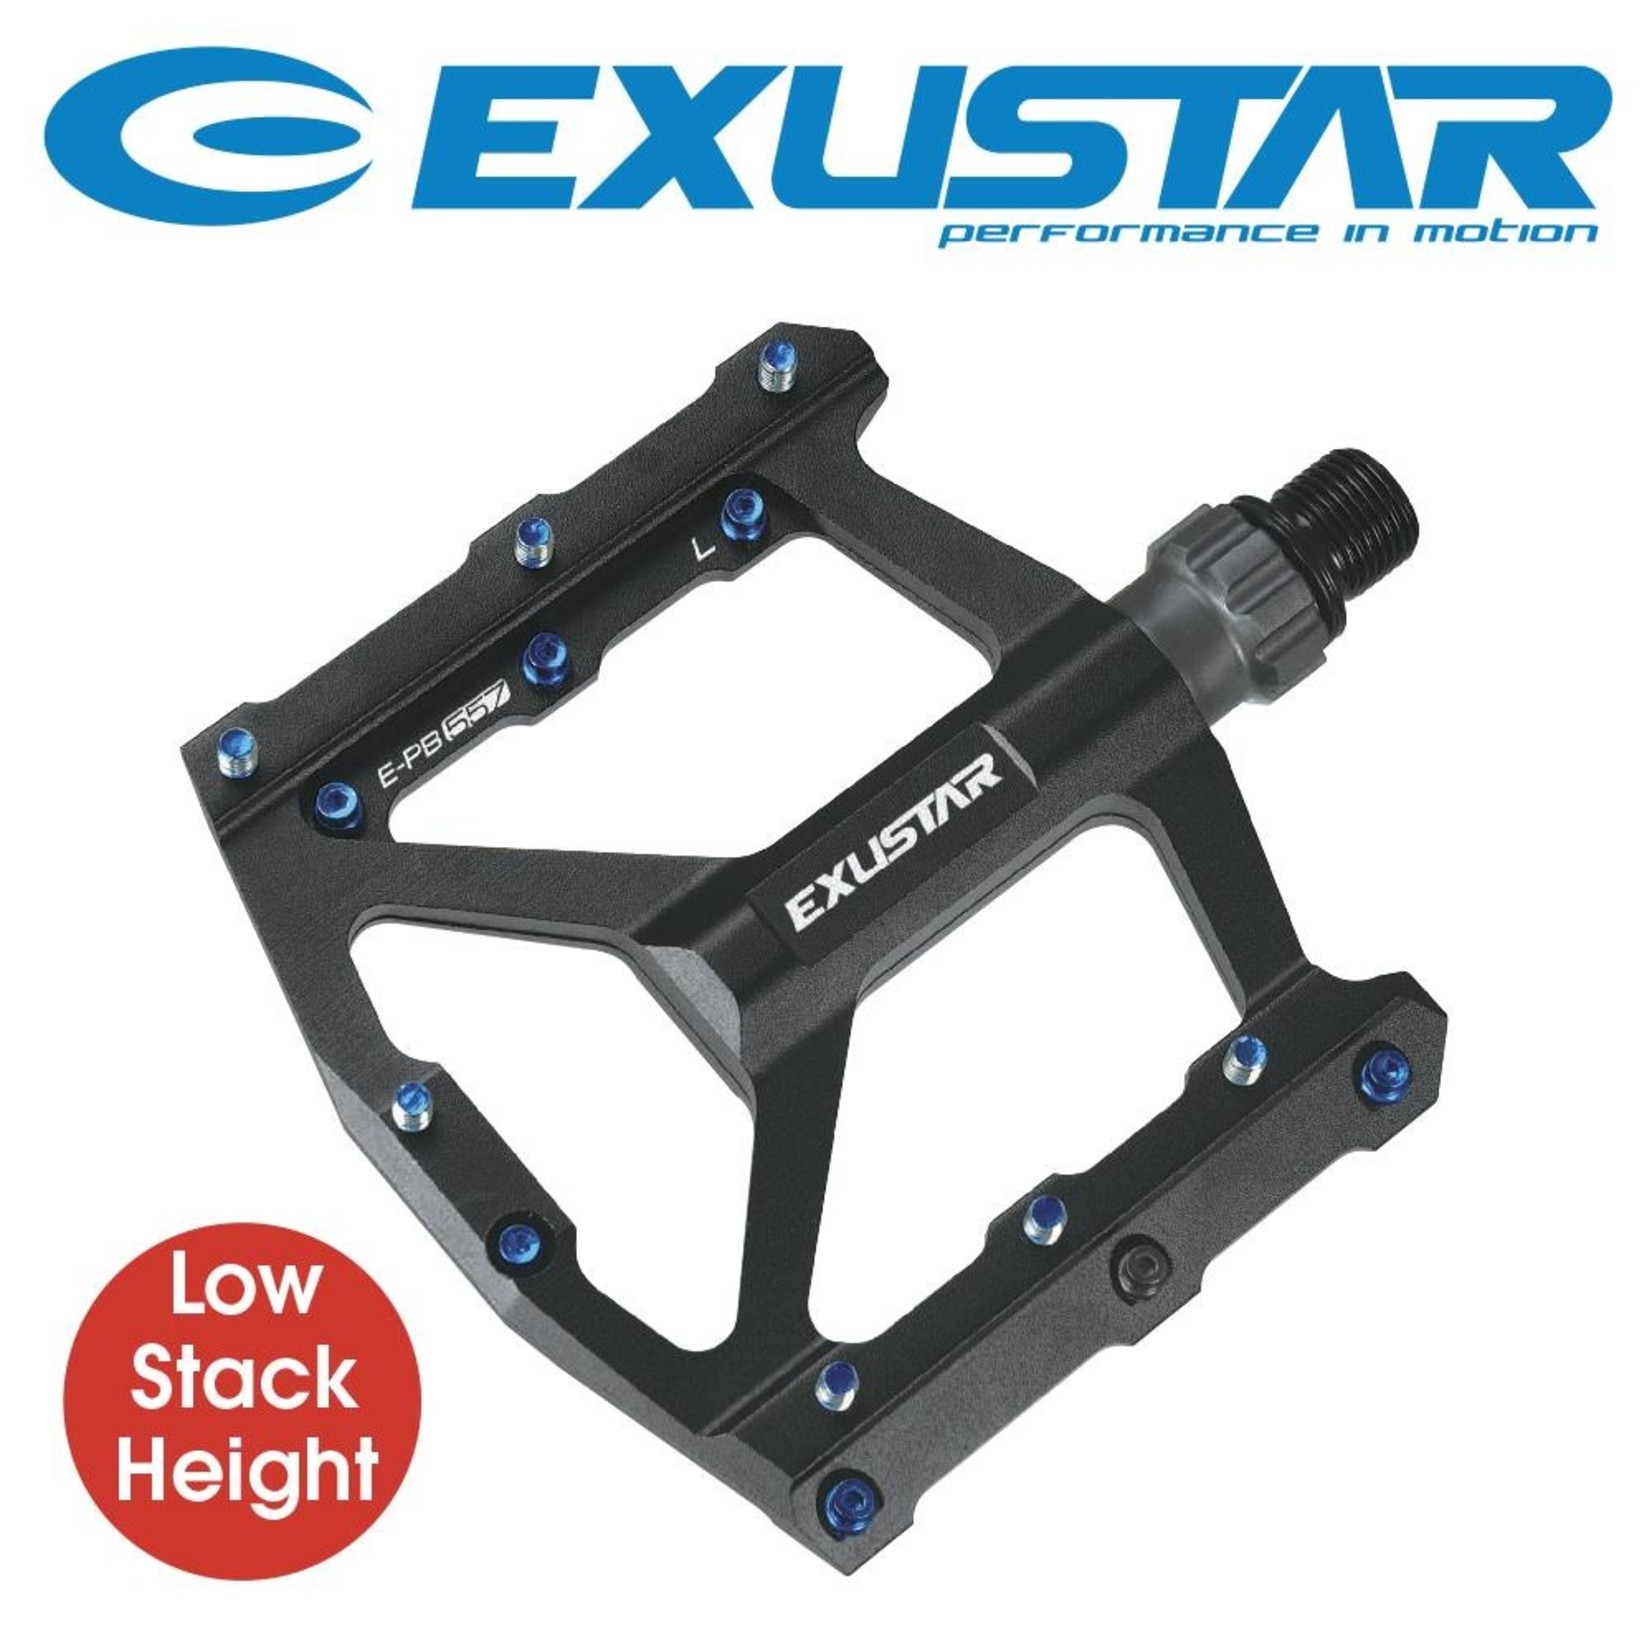 Exustar Exustar BMX Bike Pedals - Slim Profile  - 6061 Aluminum - Black